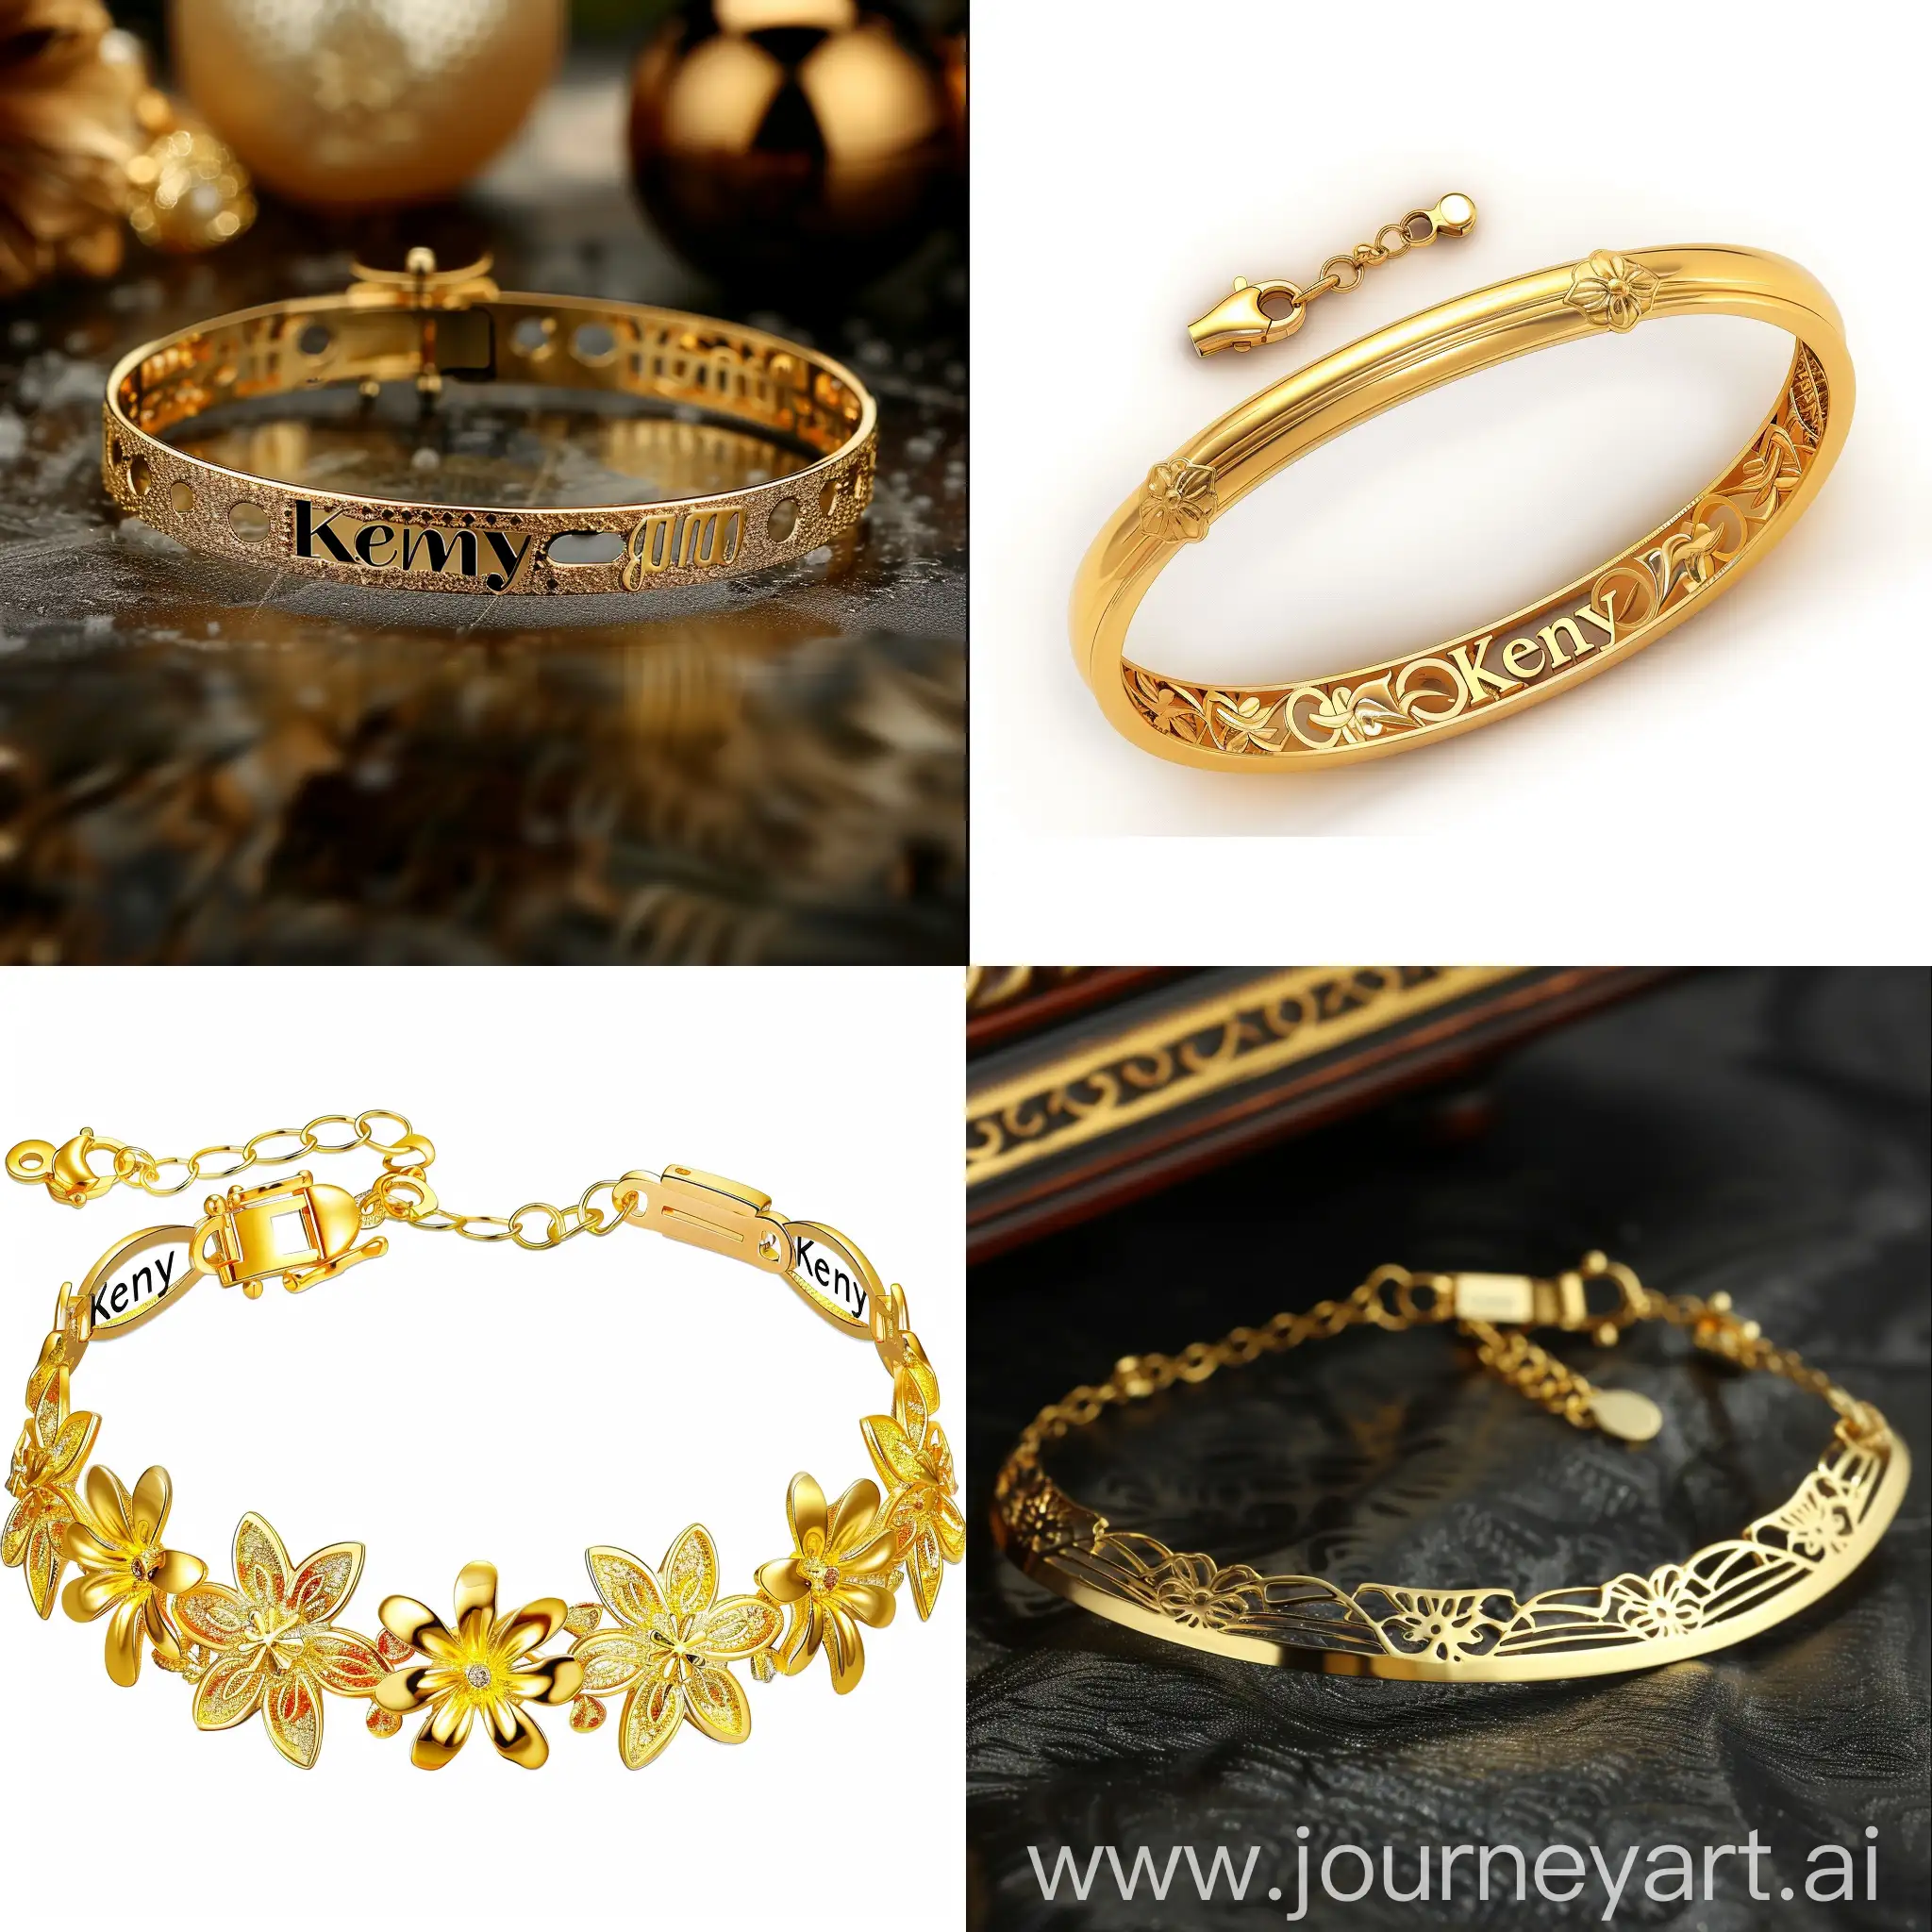 Exquisite-Kemy-Golden-Bracelet-with-Customized-Name-Elegant-Jewelry-Design